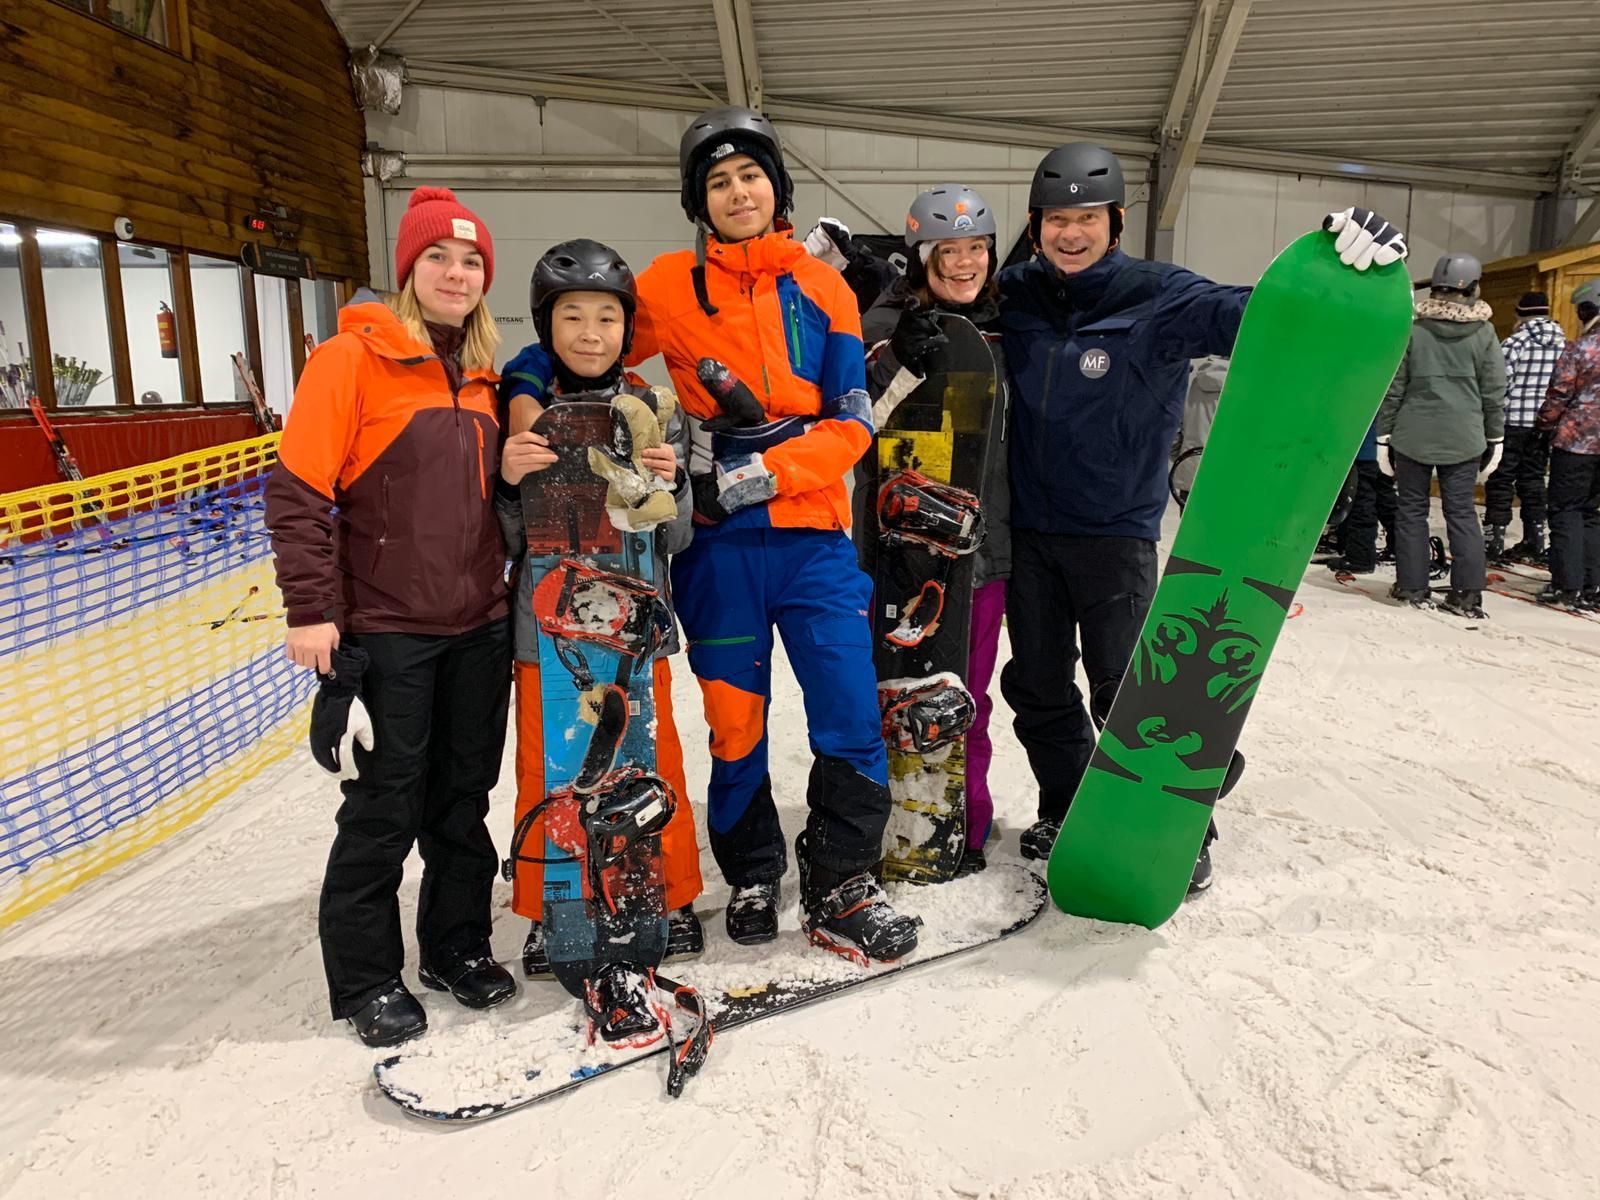 Parasnowboard talentengroep 2020 van de Nederlandse Ski Vereniging